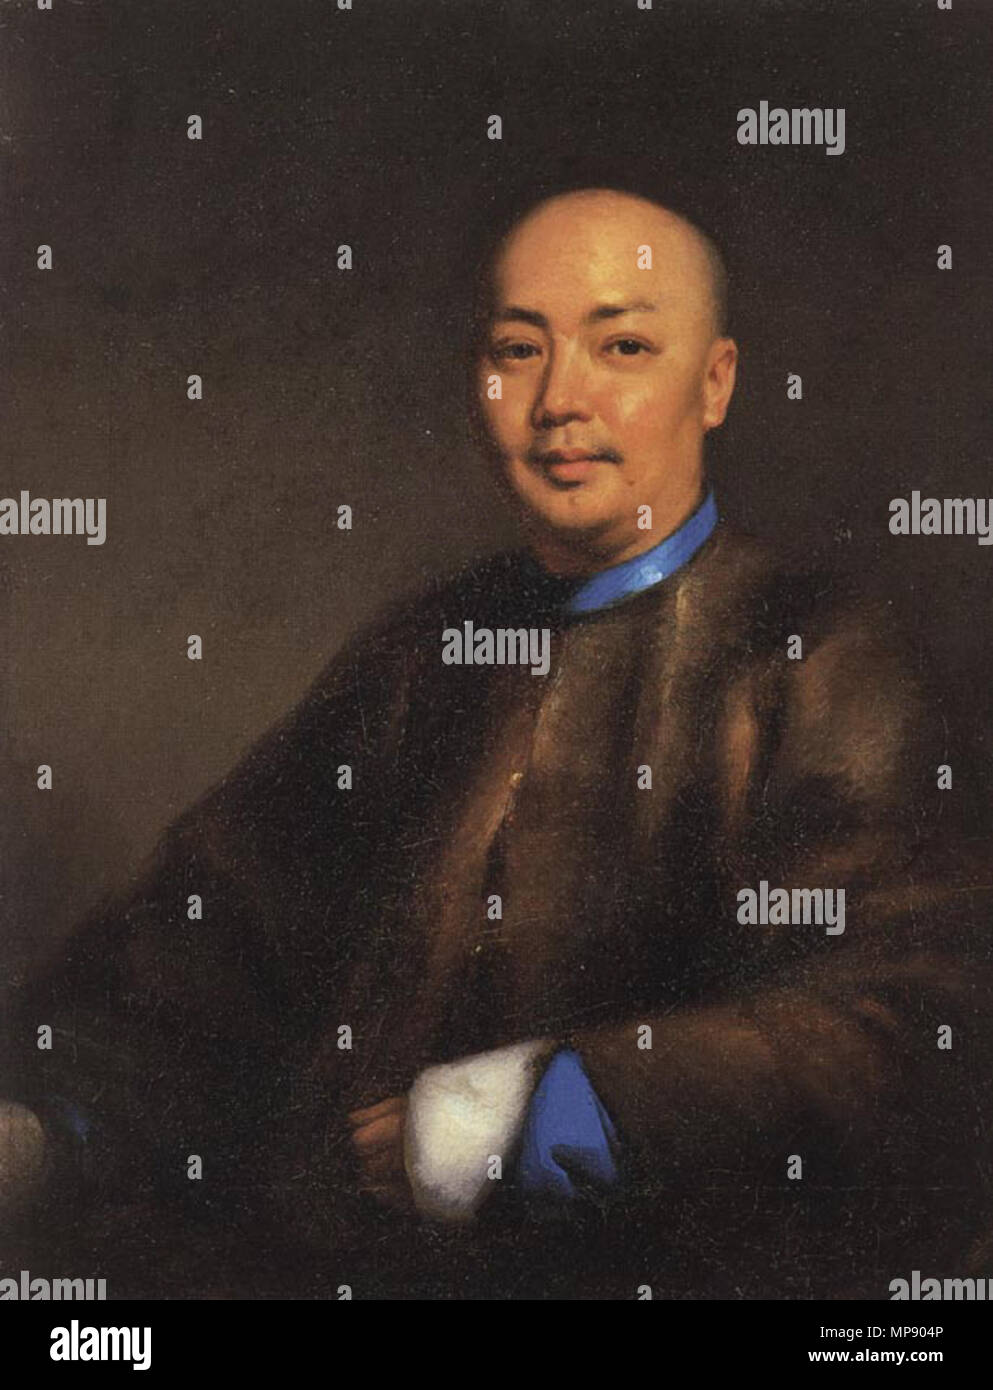 . Englisch: Self-portrait von Lam. 1840er Jahre. Lam Qua (1801-1860) Alternative Namen Kwan Kiu Cheong Beschreibung Chinesische Maler Geburtsdatum / Tod 1801 1860 Behörde: Q 3359237 VIAF: 95855641 ULAN: 500028182 RKD: 65177 789 Lam Qua self portrait Stockfoto